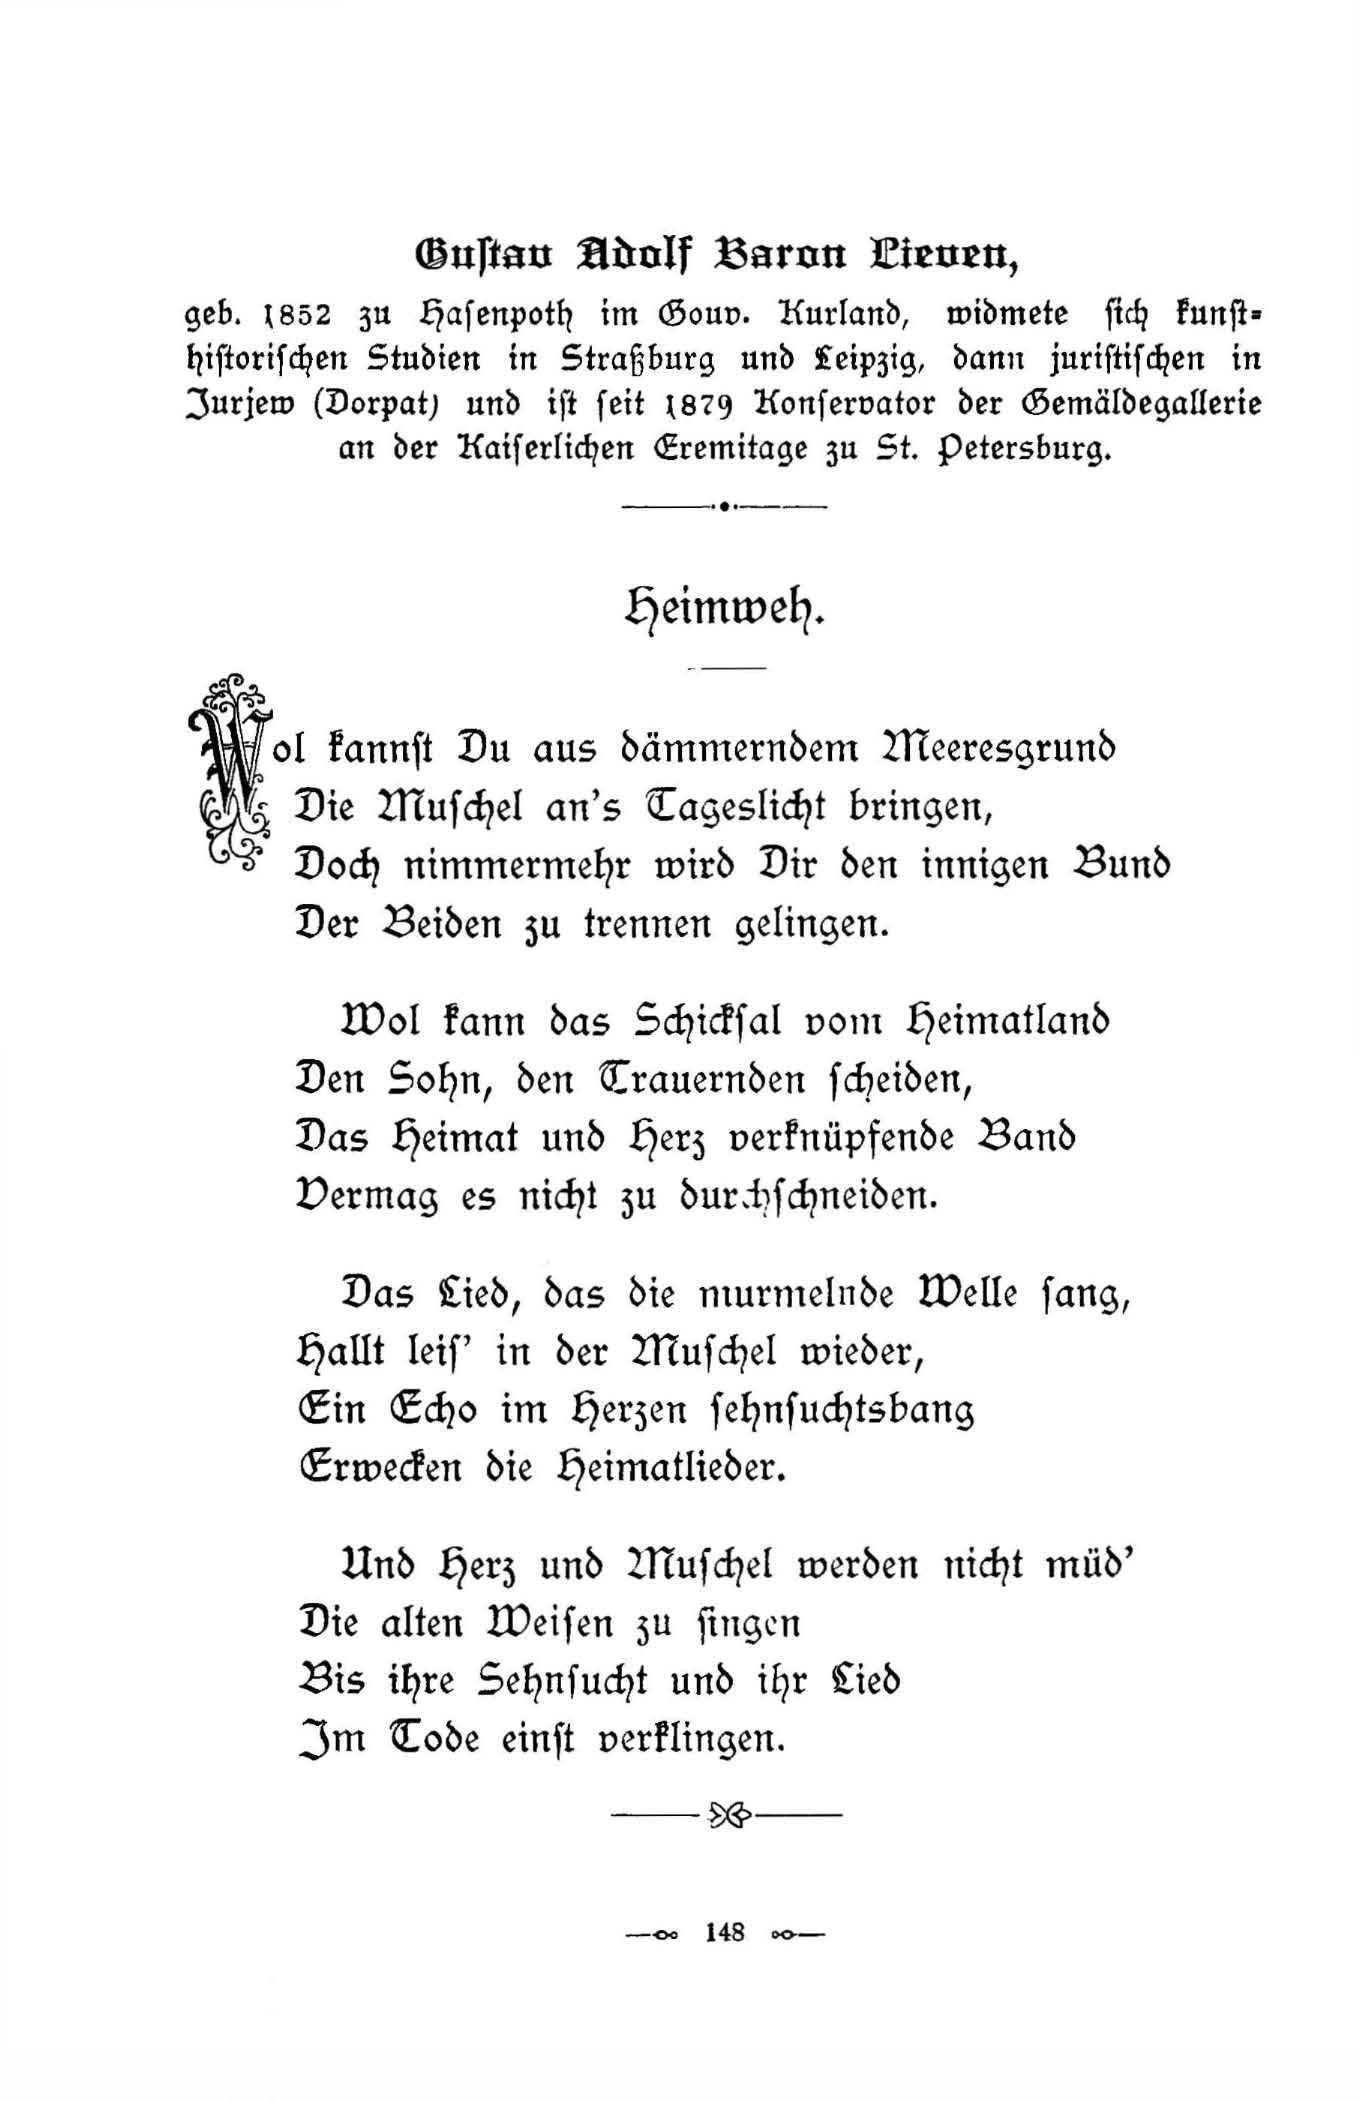 Heimweh (1896) | 1. (148) Основной текст